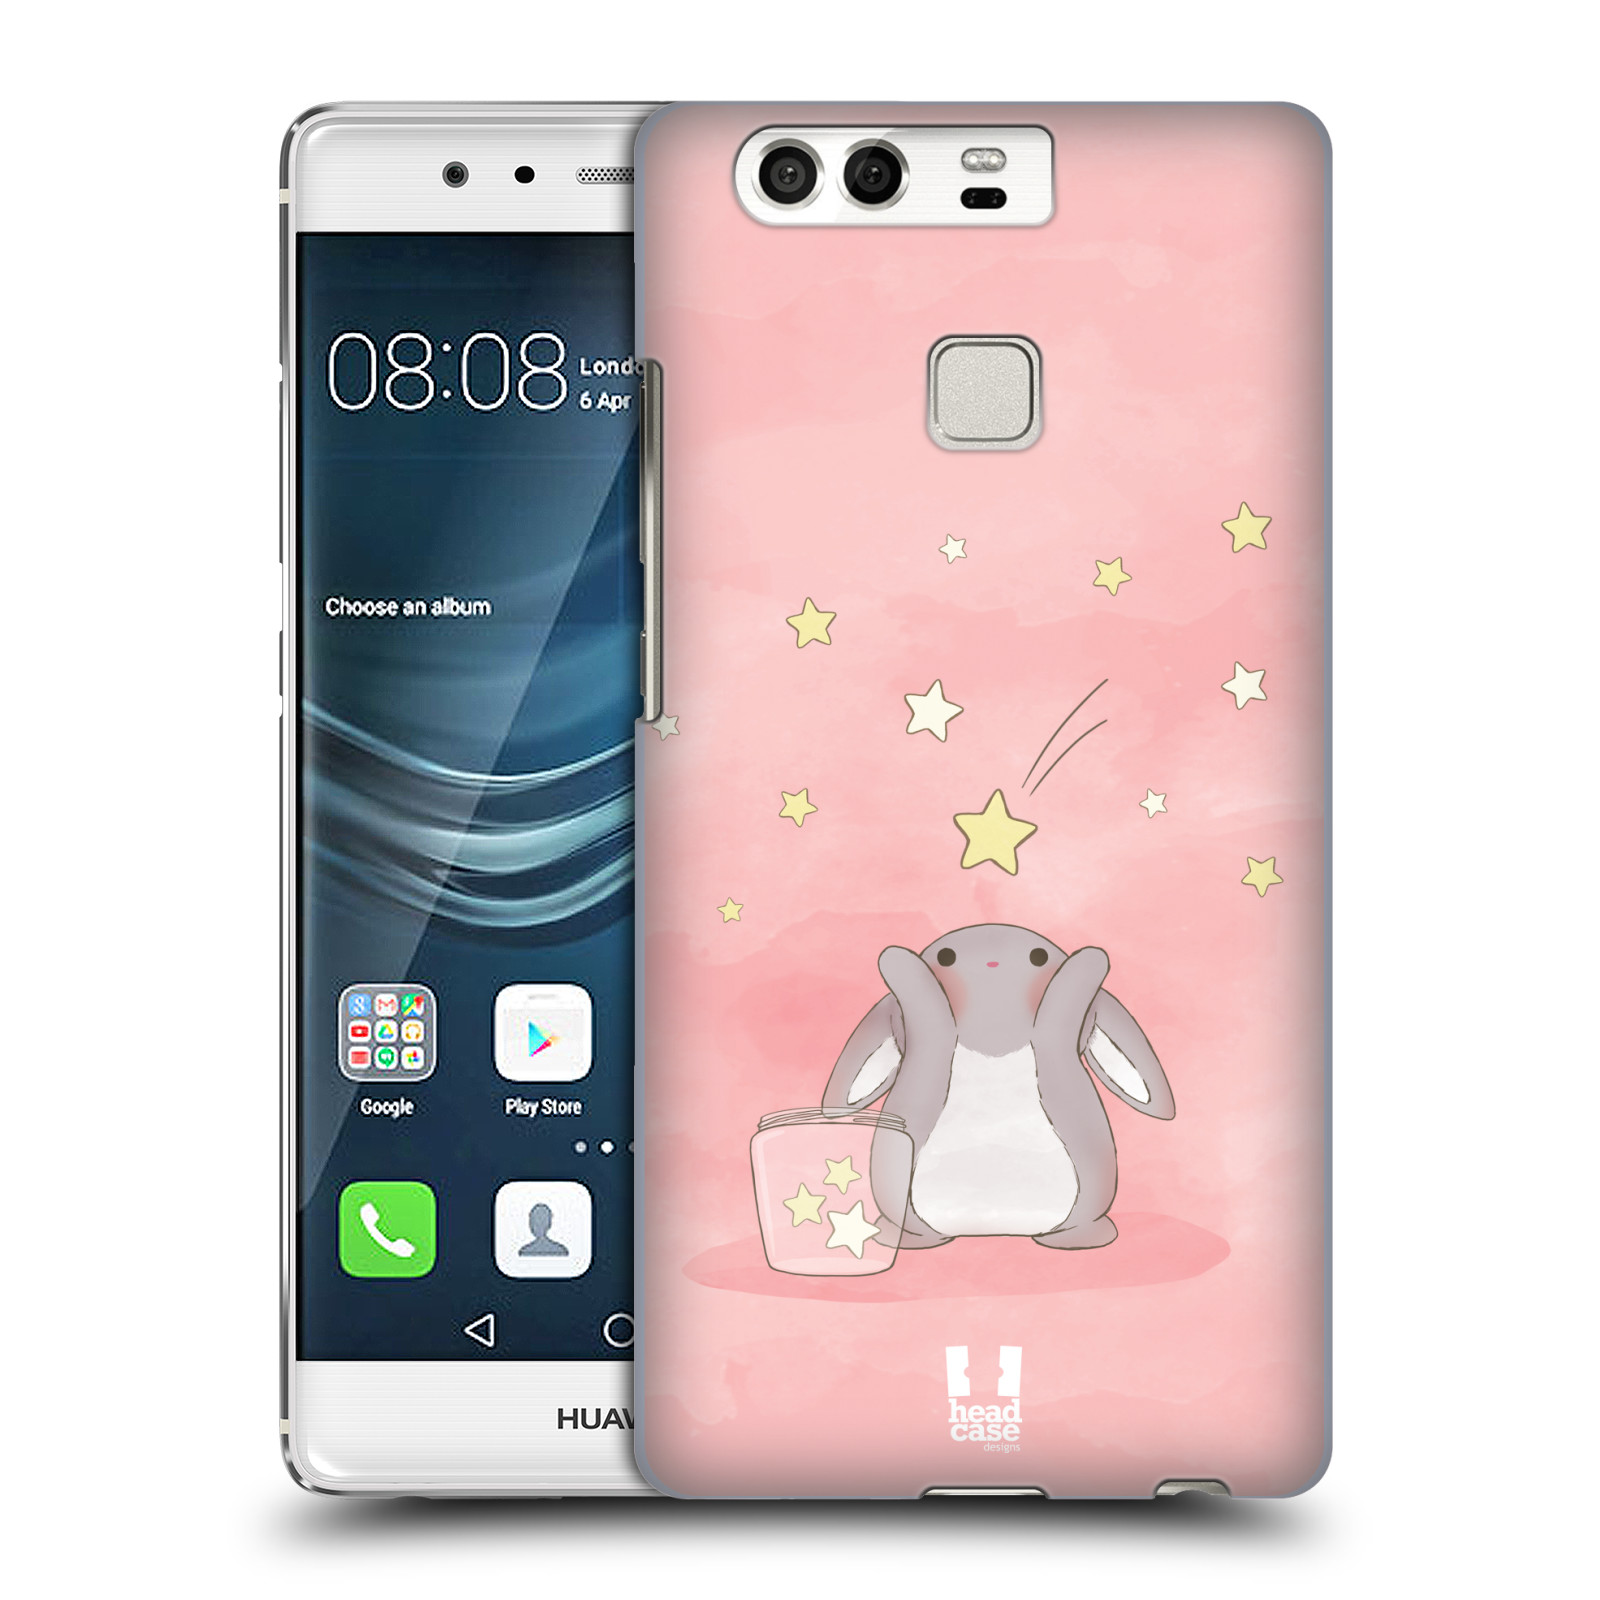 HEAD CASE plastový obal na mobil Huawei P9 / P9 DUAL SIM vzor králíček a hvězdy růžová